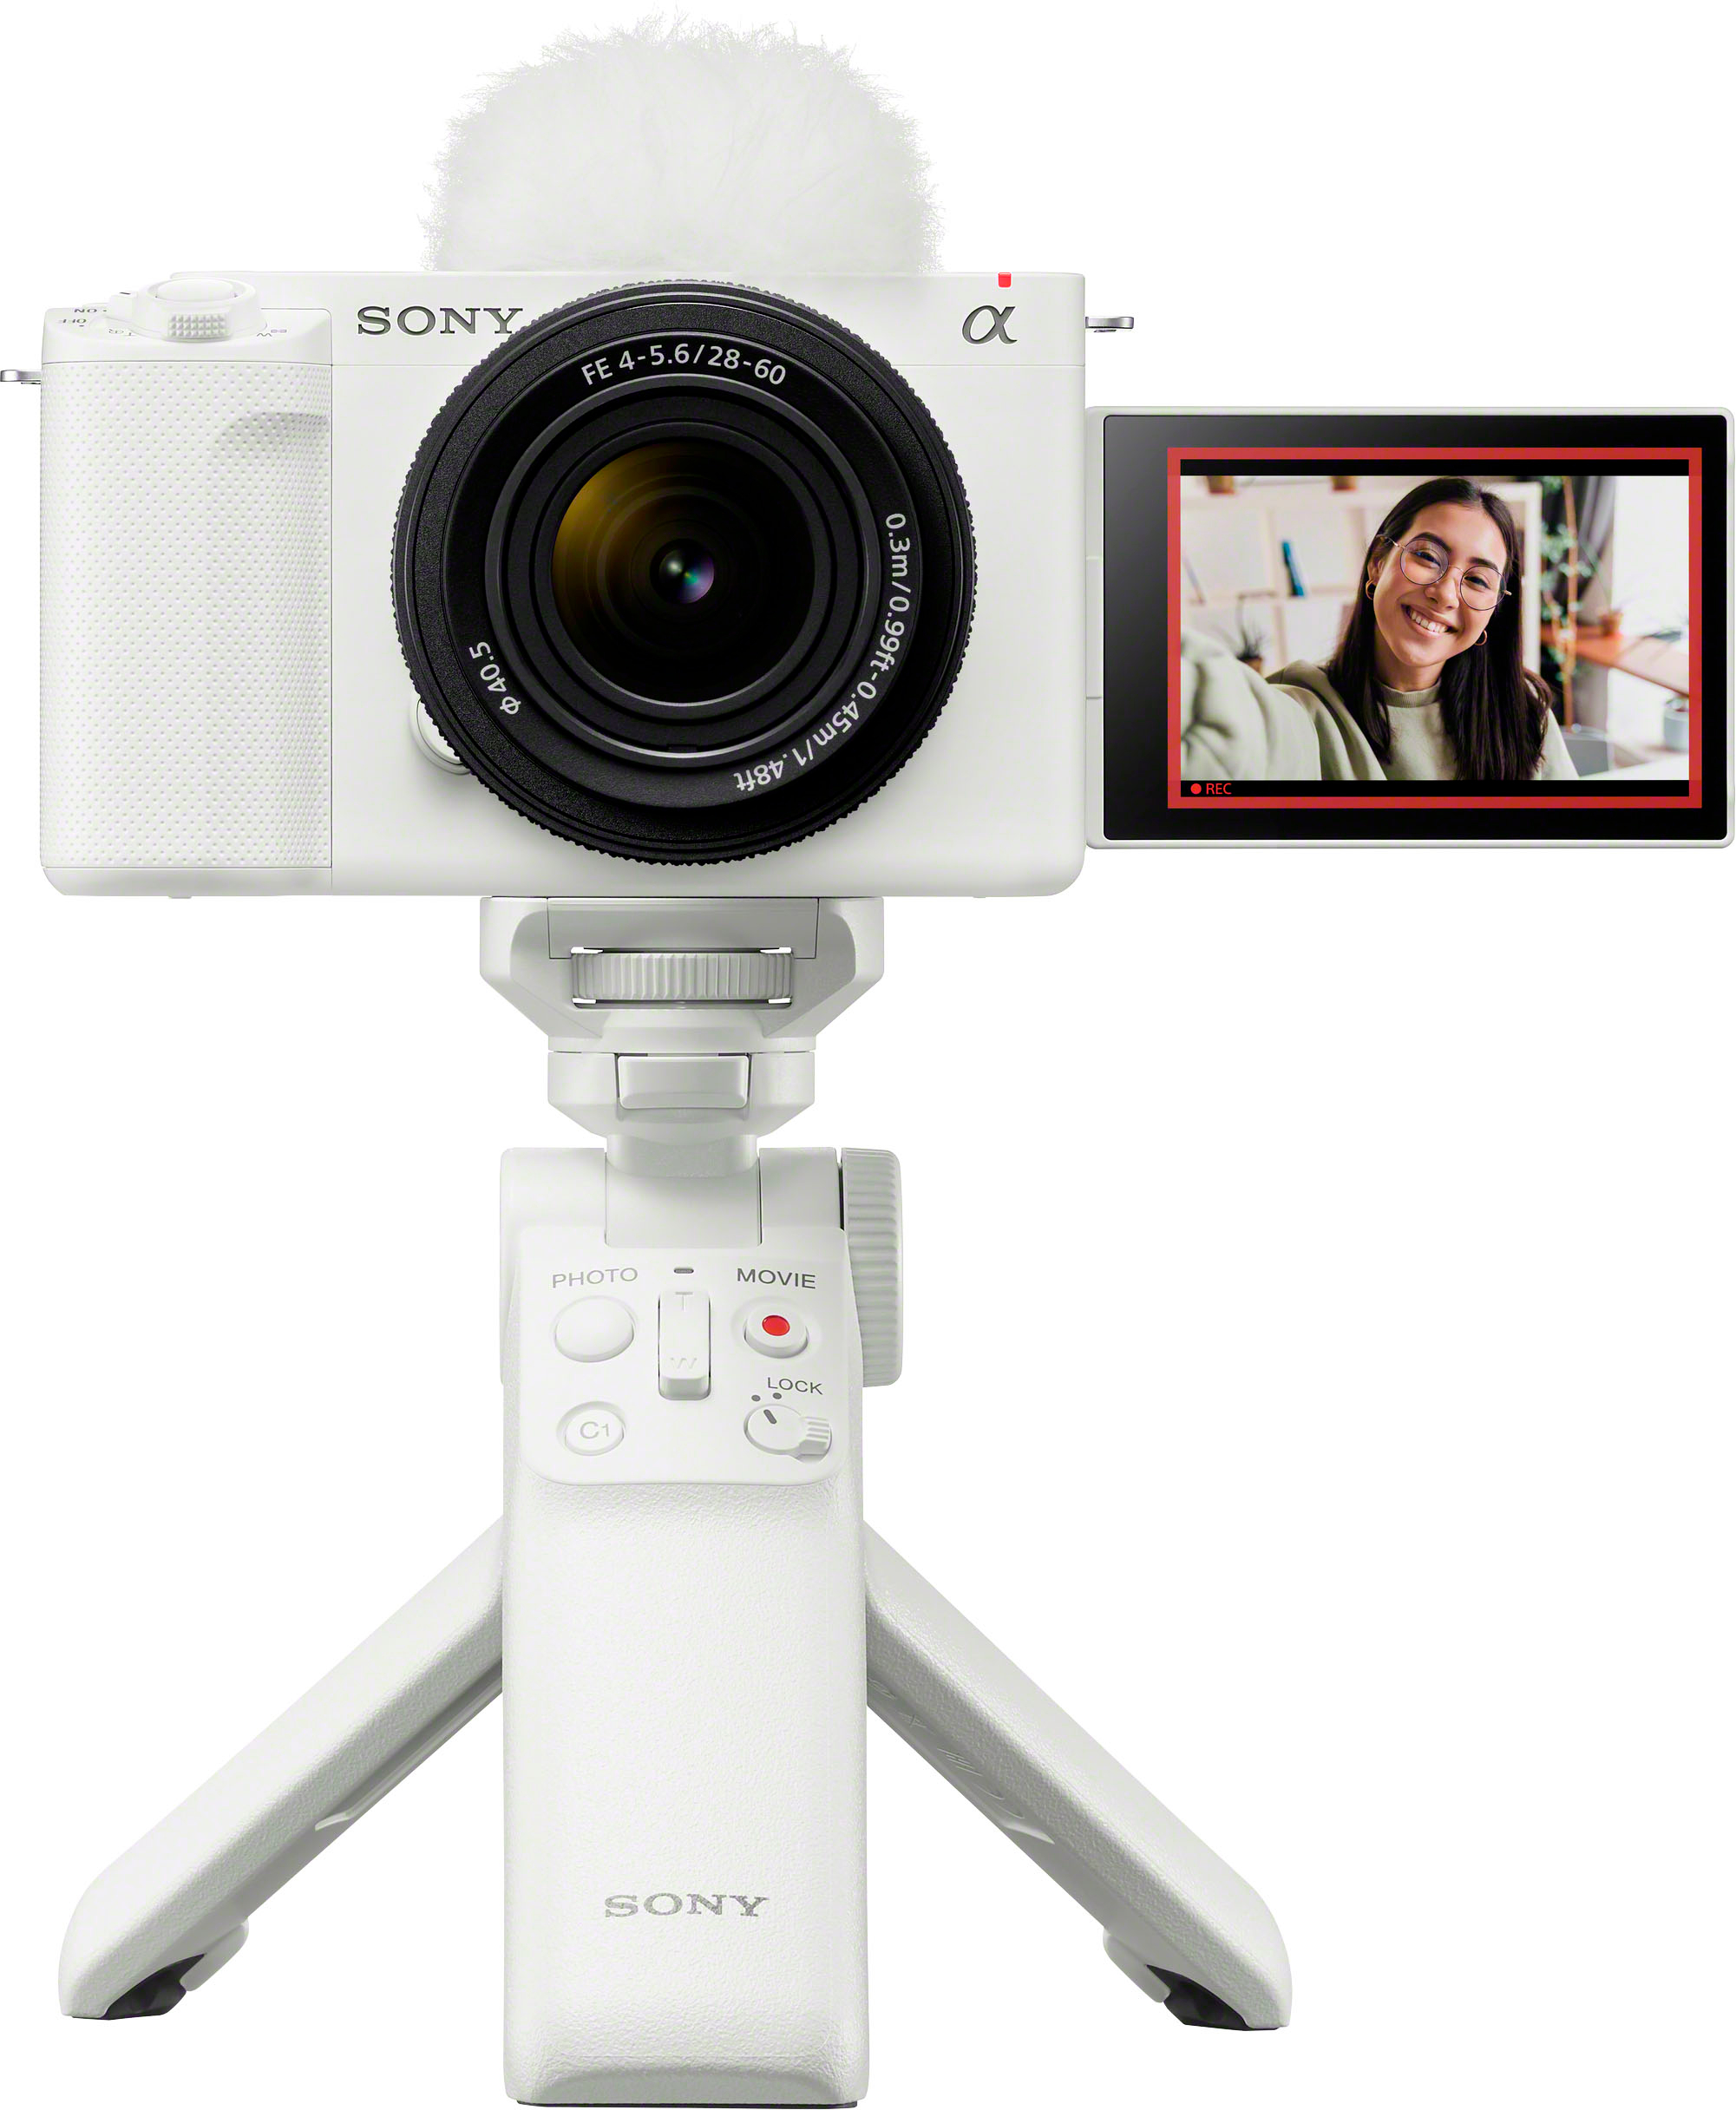 Sony ZV-E1 Mirrorless Camera 